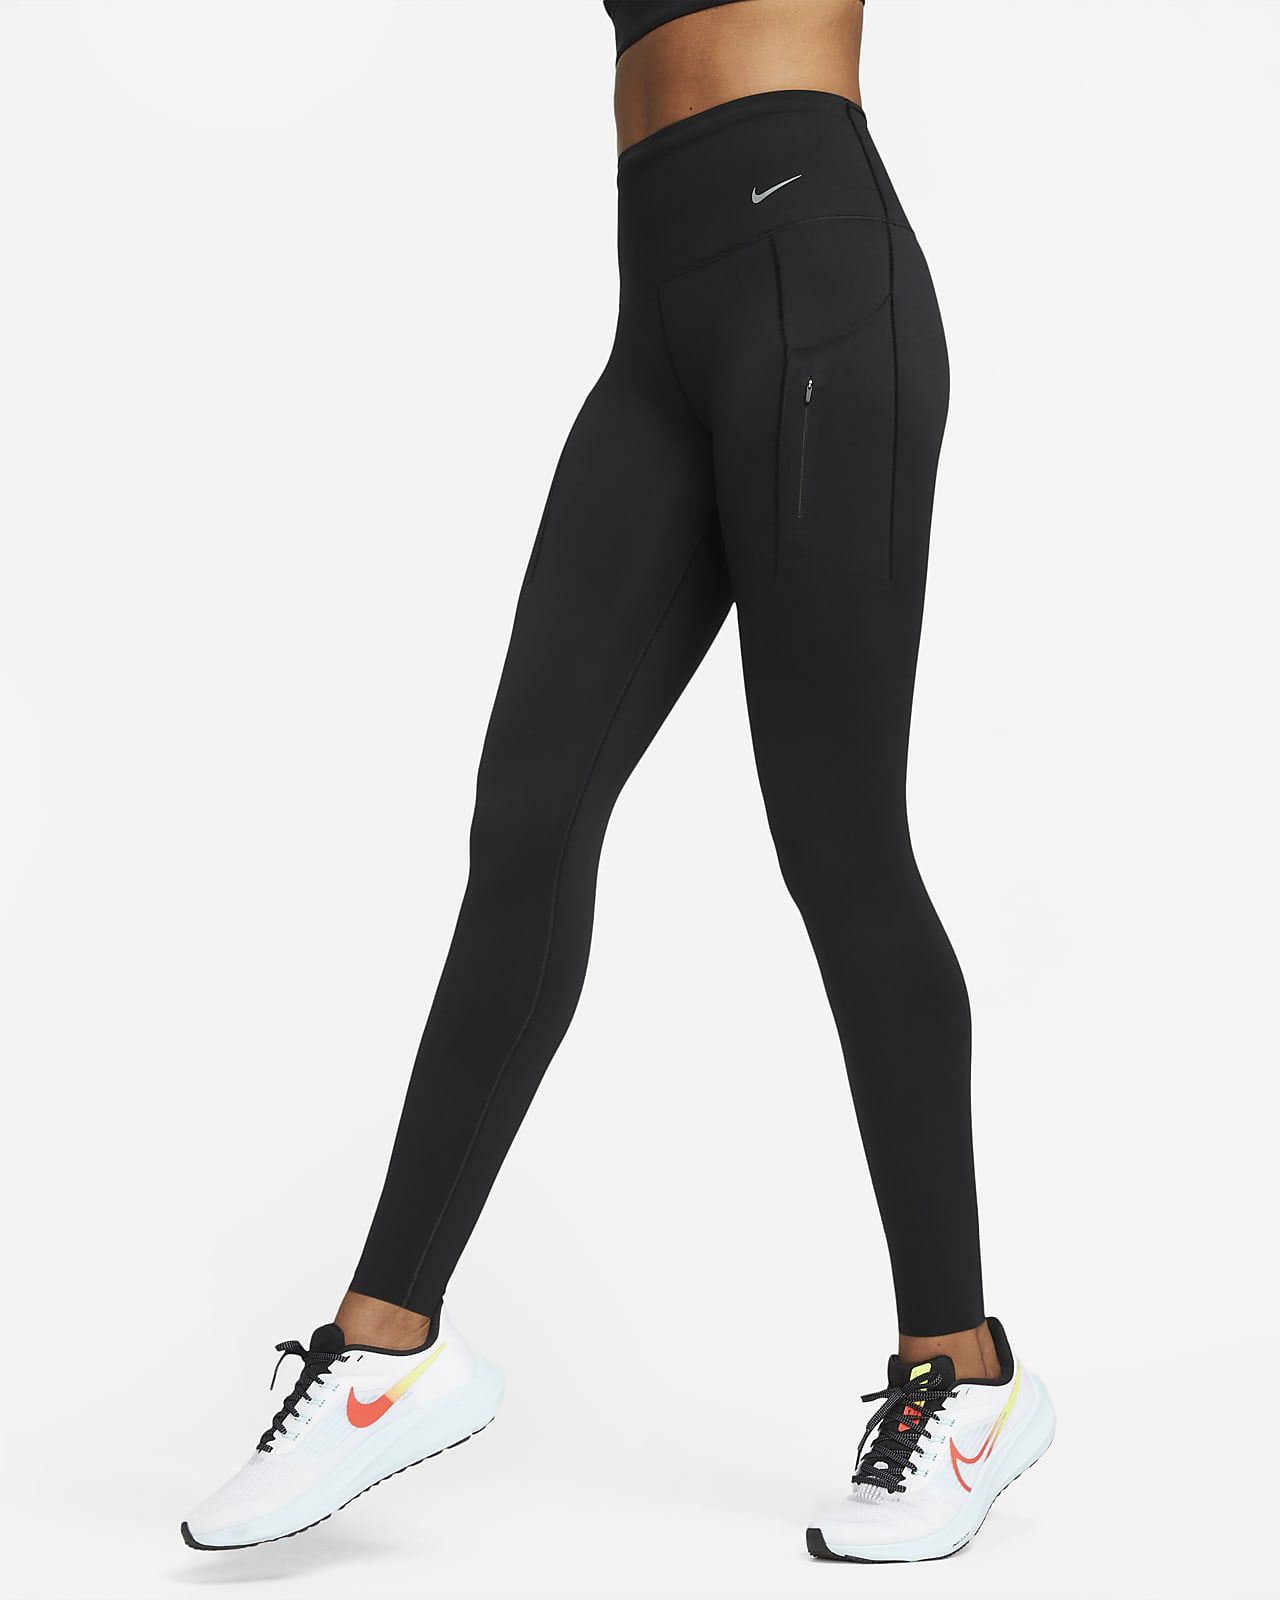 Nike Go Women's Firm-Support High-Waisted Full-Length Leggings with Pockets. Nike.com | Nike (US)